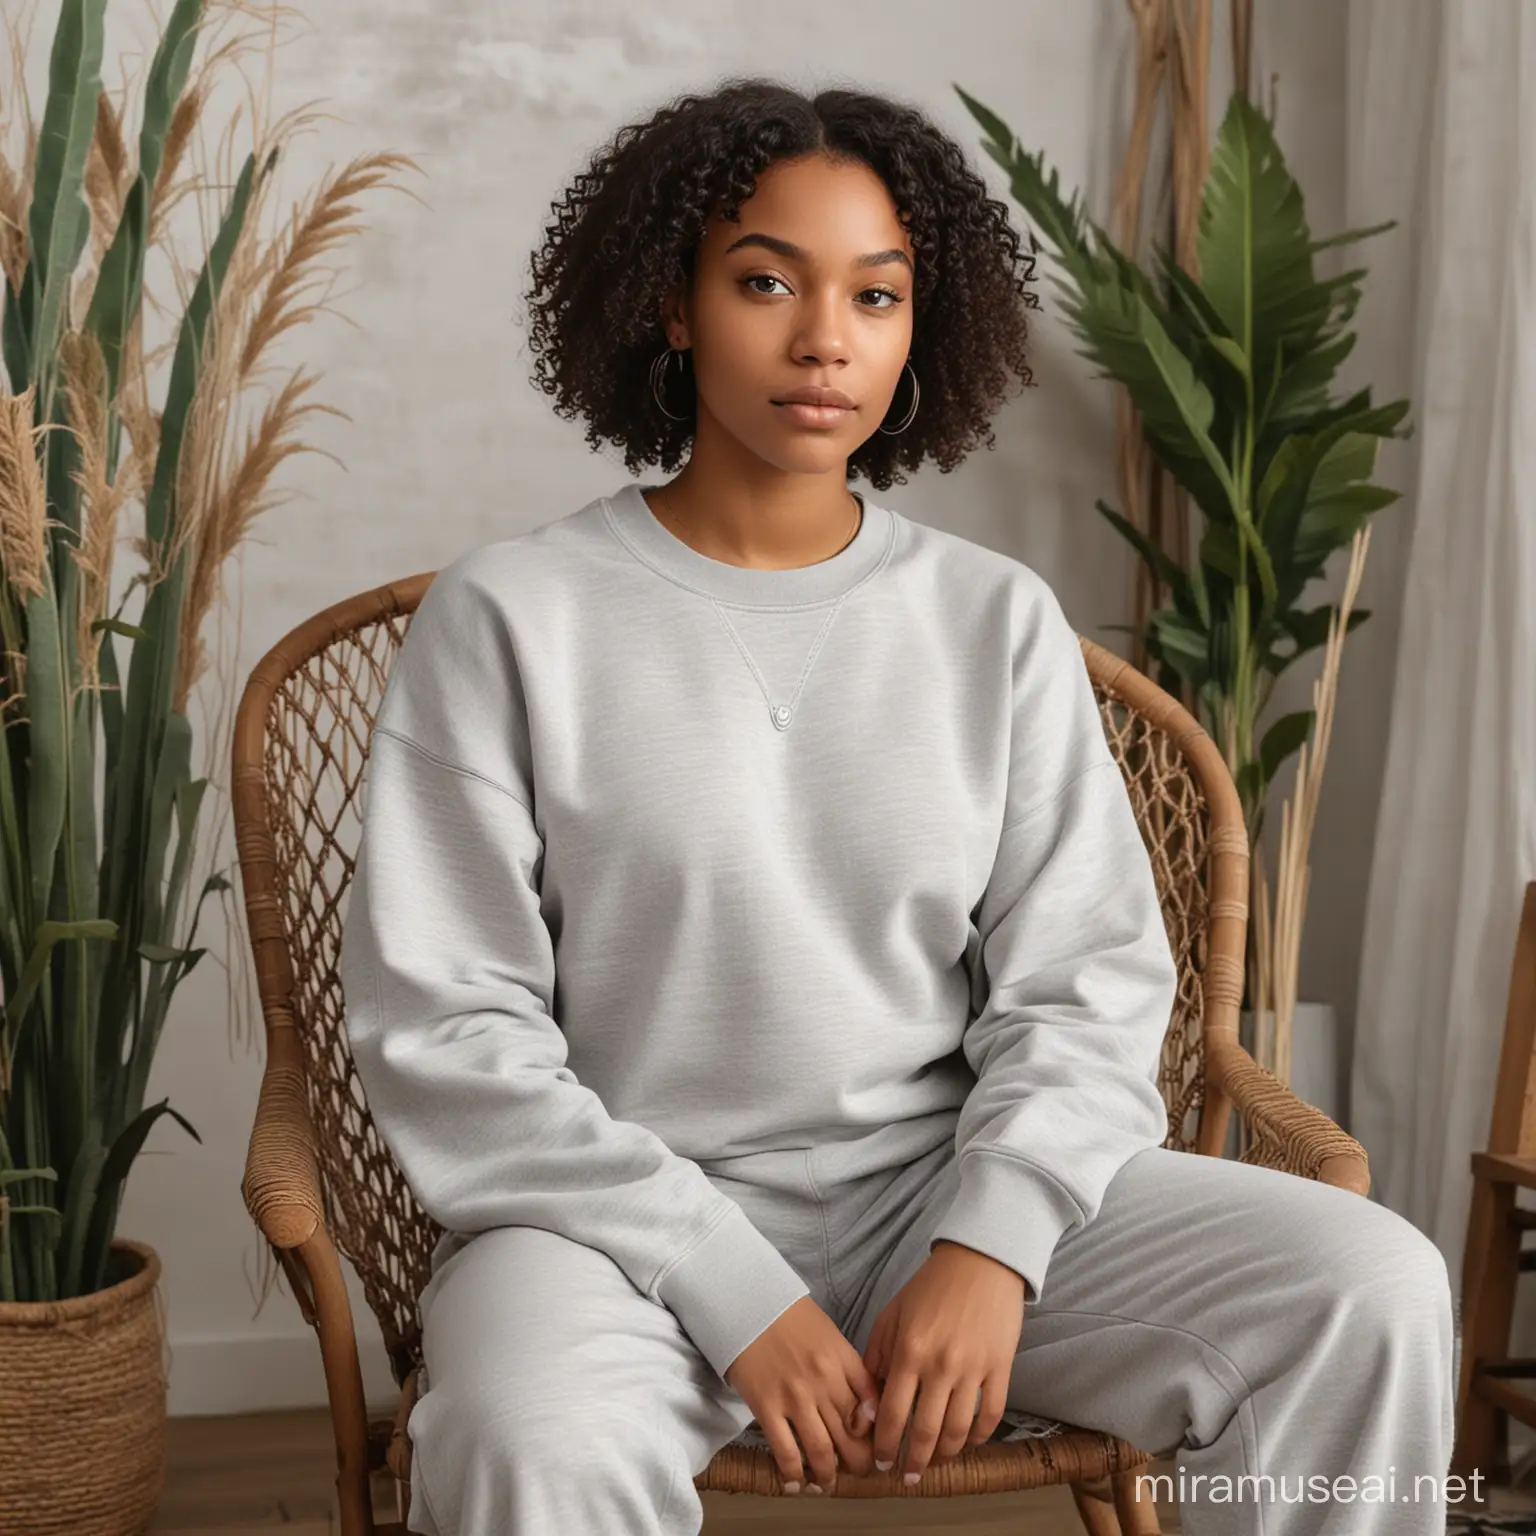 young black women, wearing a light grey crewneck sweatshirt, boho background, sitting down on a chair, facing the camera, 